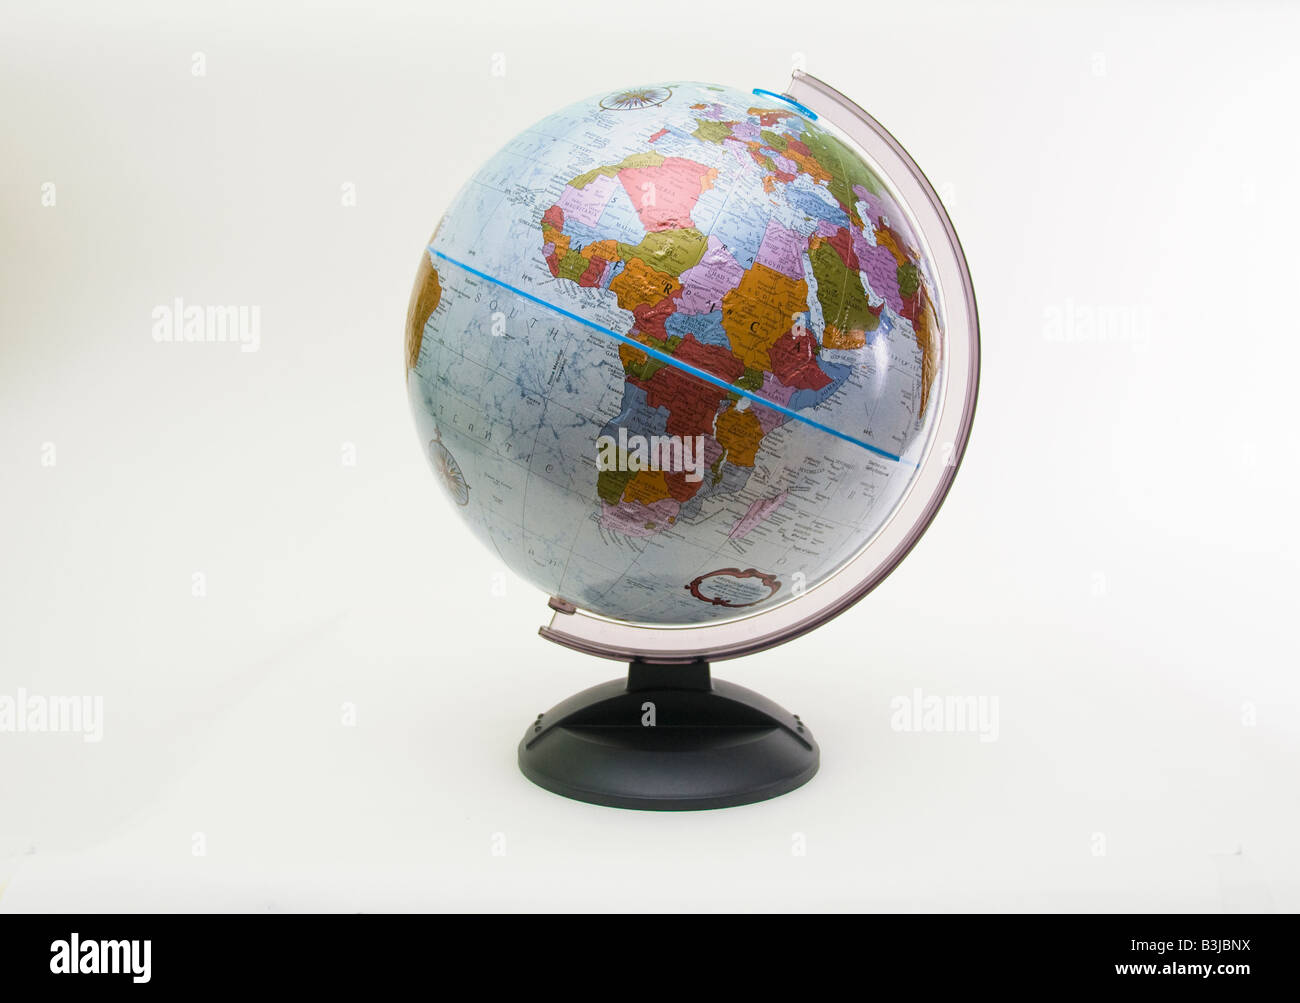 Silo Image of an Earth globe. Stock Photo